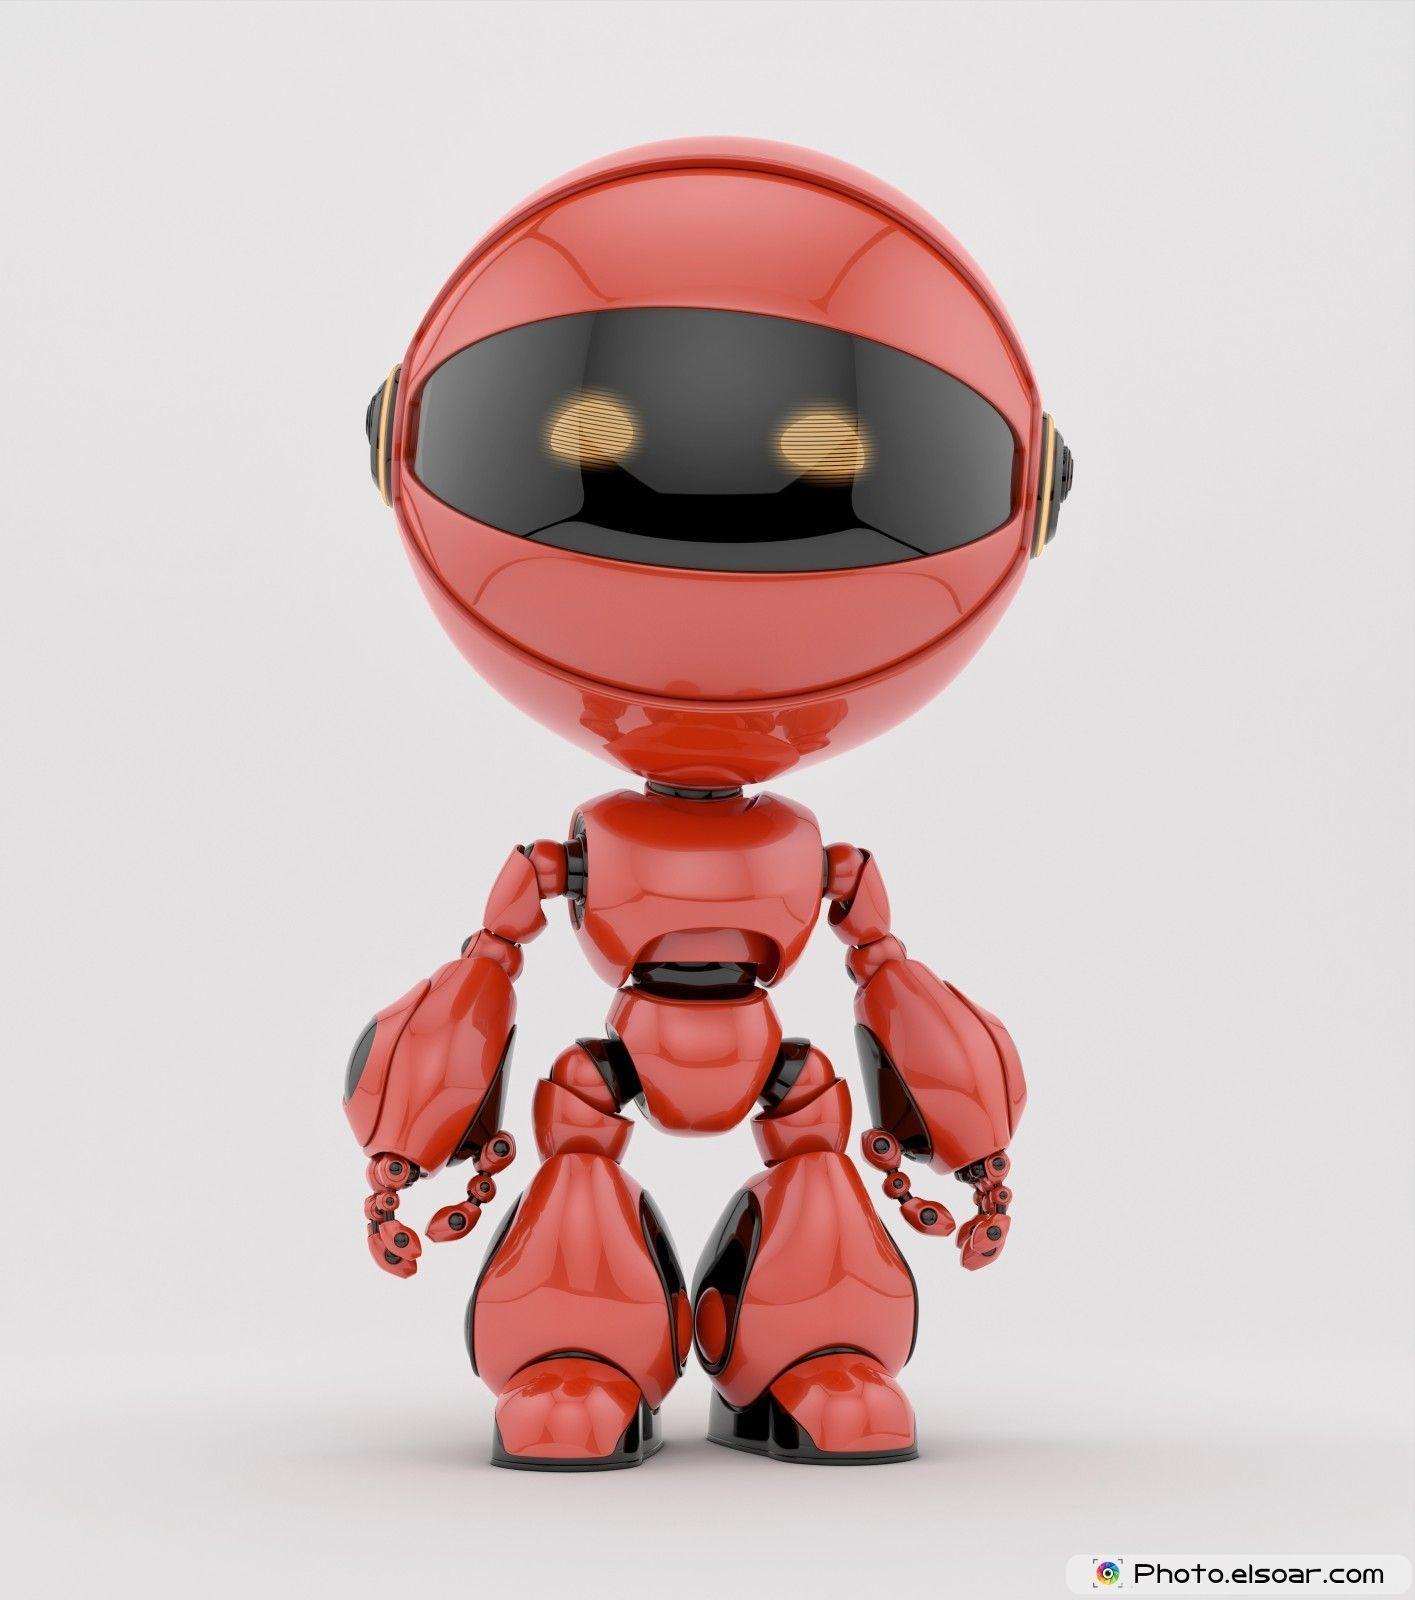 Orange-Eyed Robot Logo - Cute robotic creature with orange eyes | Cute robots | Pinterest ...